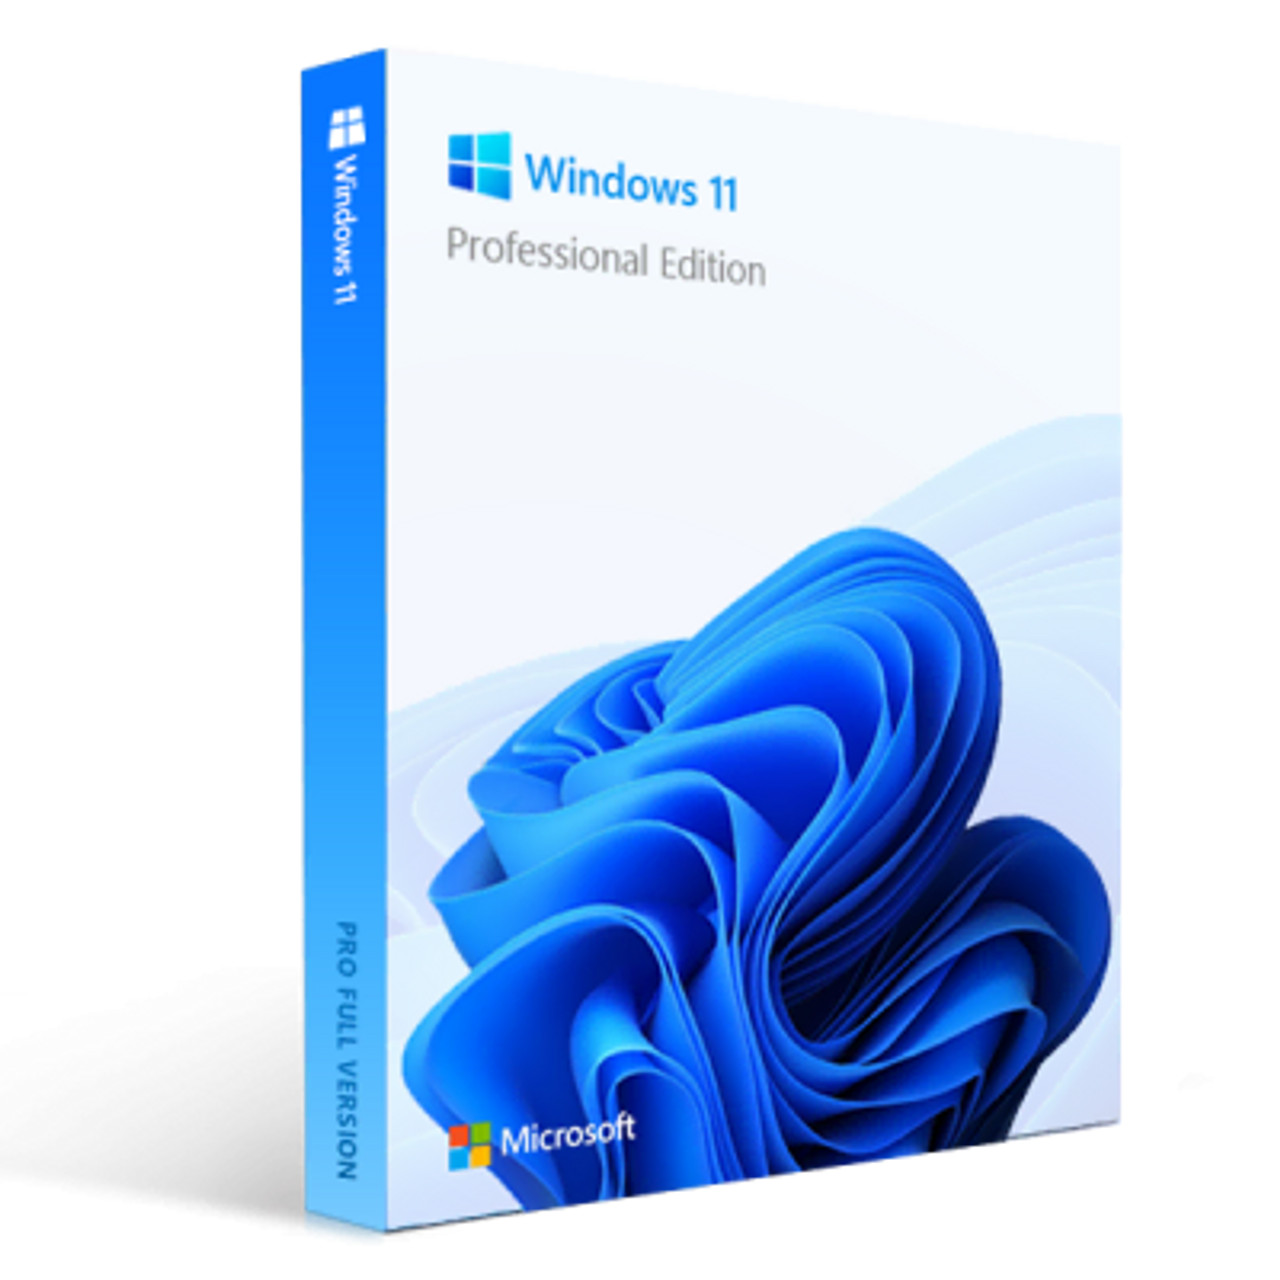 Windows 11 Pro Chave - Tecsystem Informatica